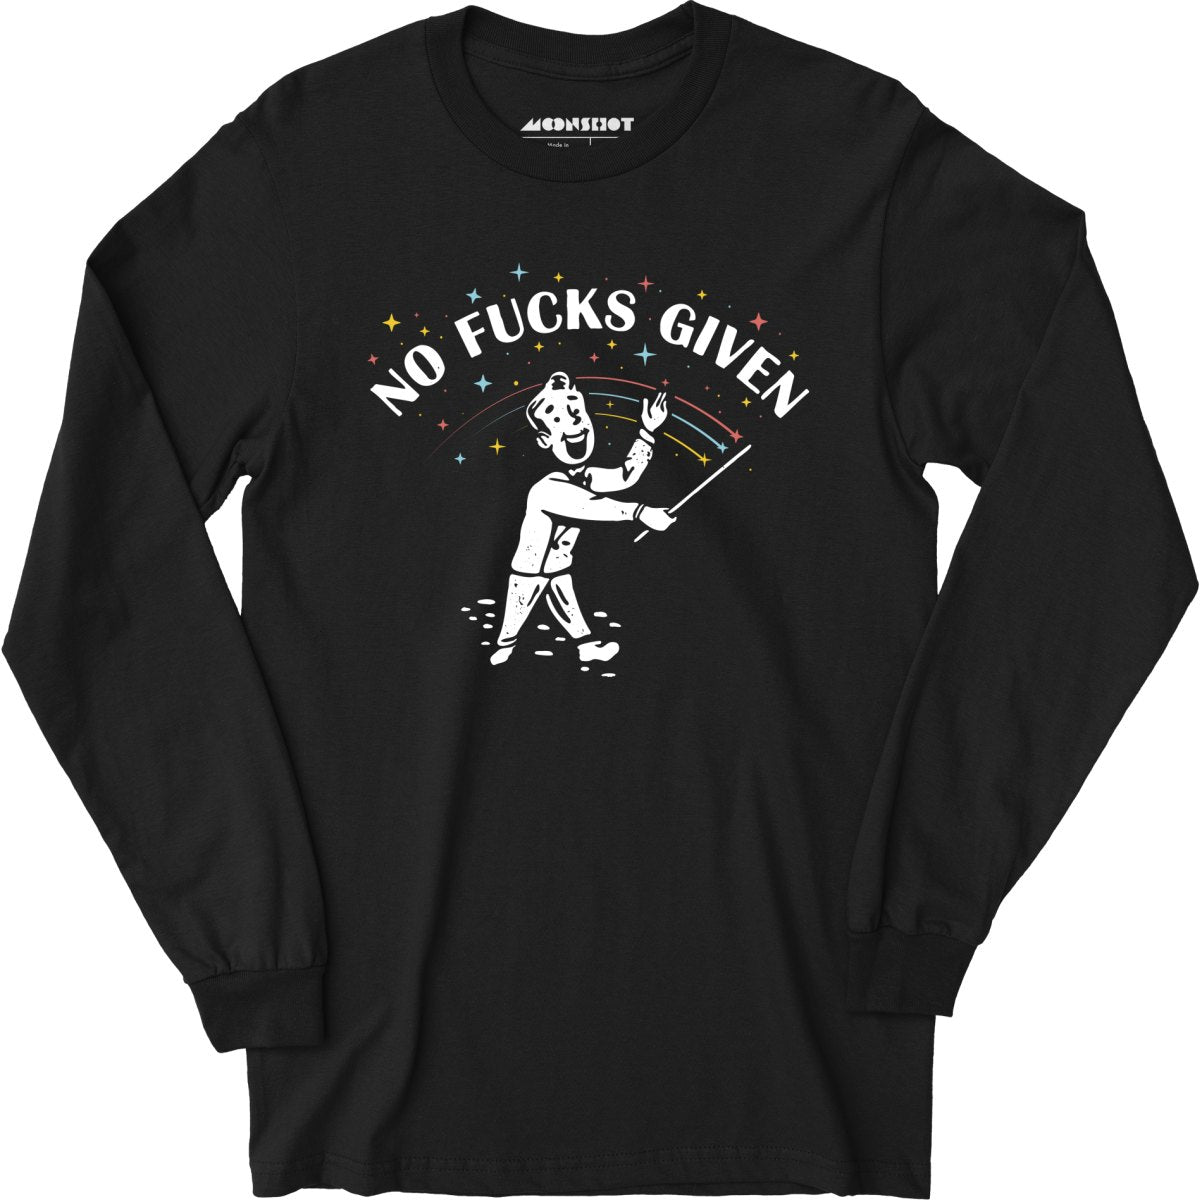 No Fucks Given - Long Sleeve T-Shirt